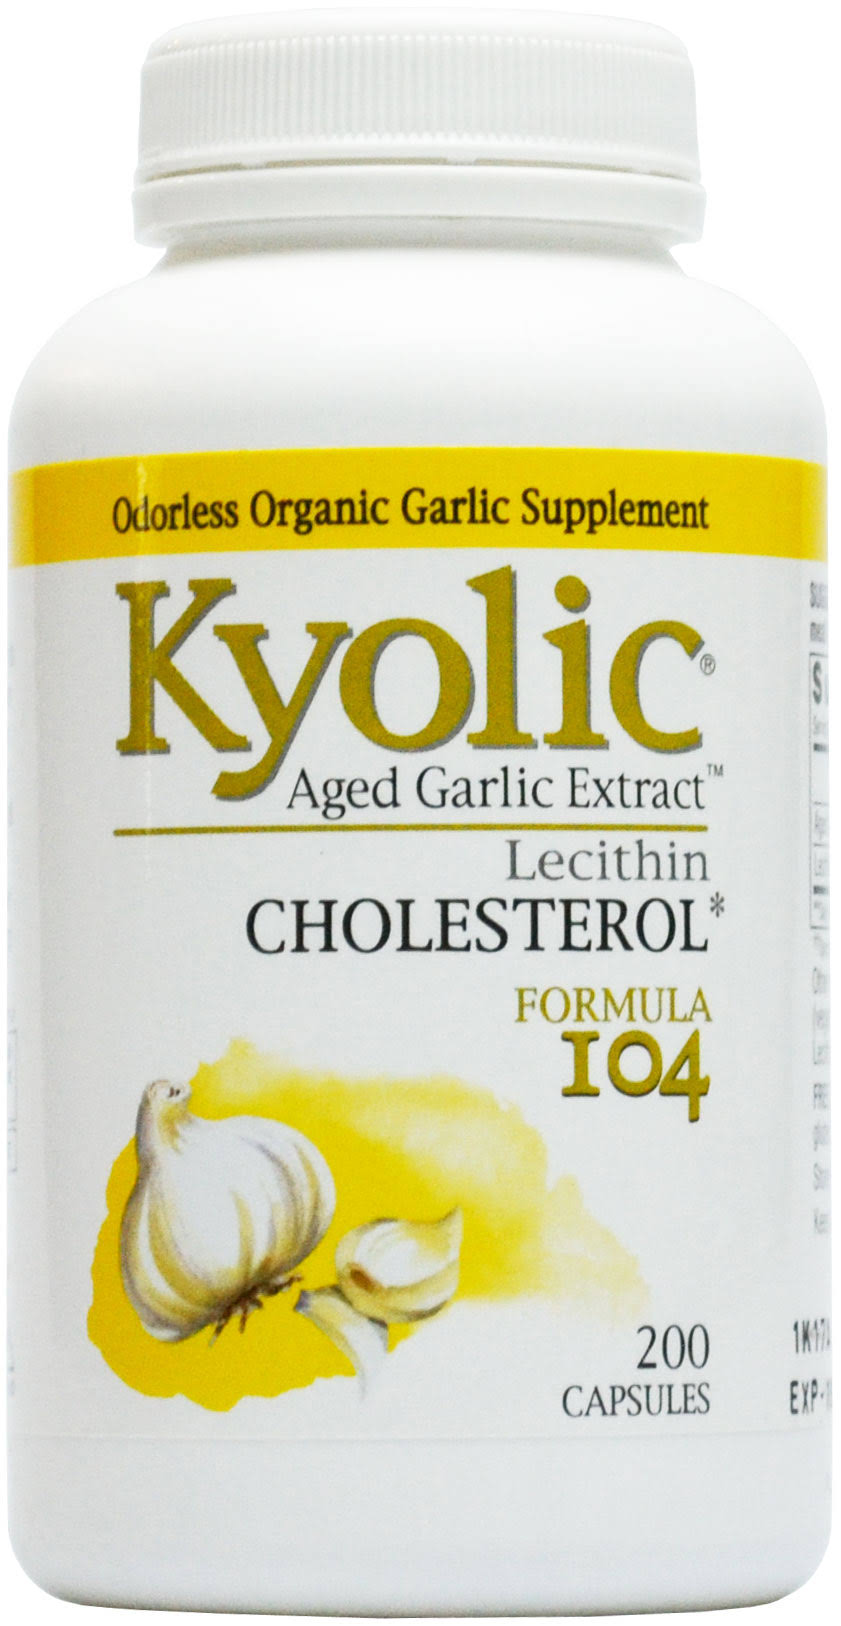 Kyolic Aged Garlic Extract Formula 104 - 200 Capsules